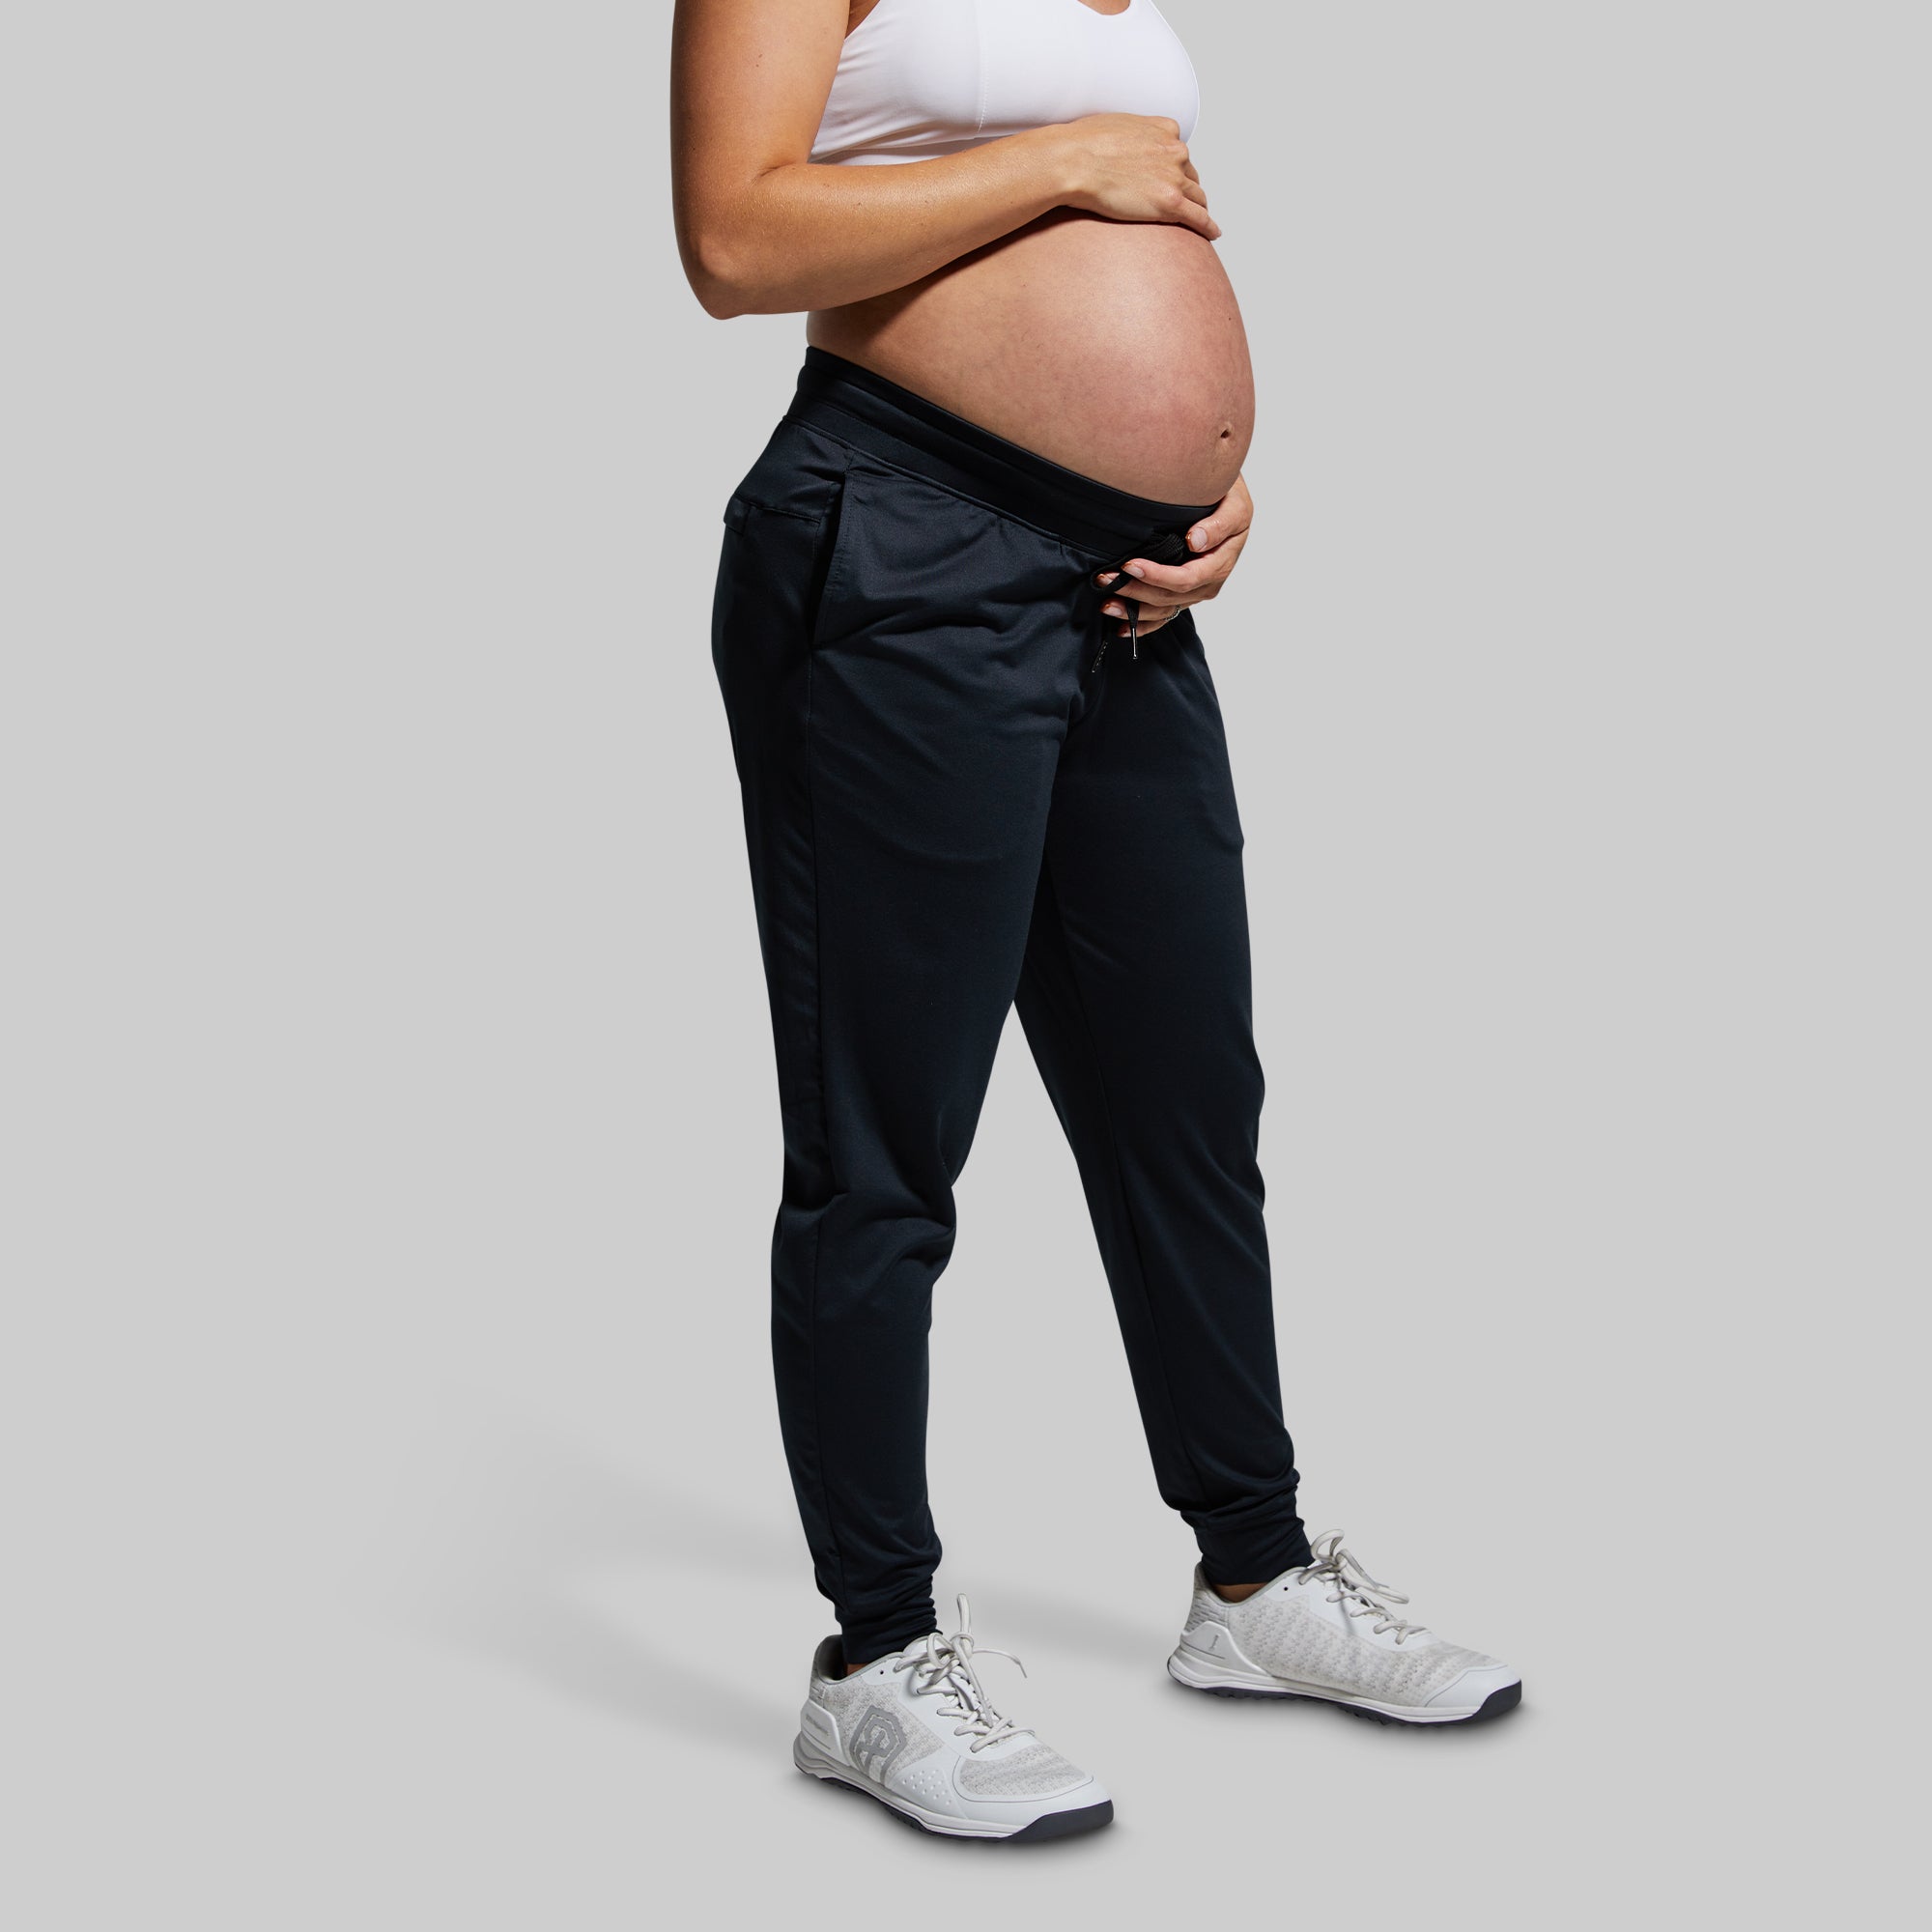 Black Maternity Joggers  Pregnancy Jogging Bottoms – Born Primitive